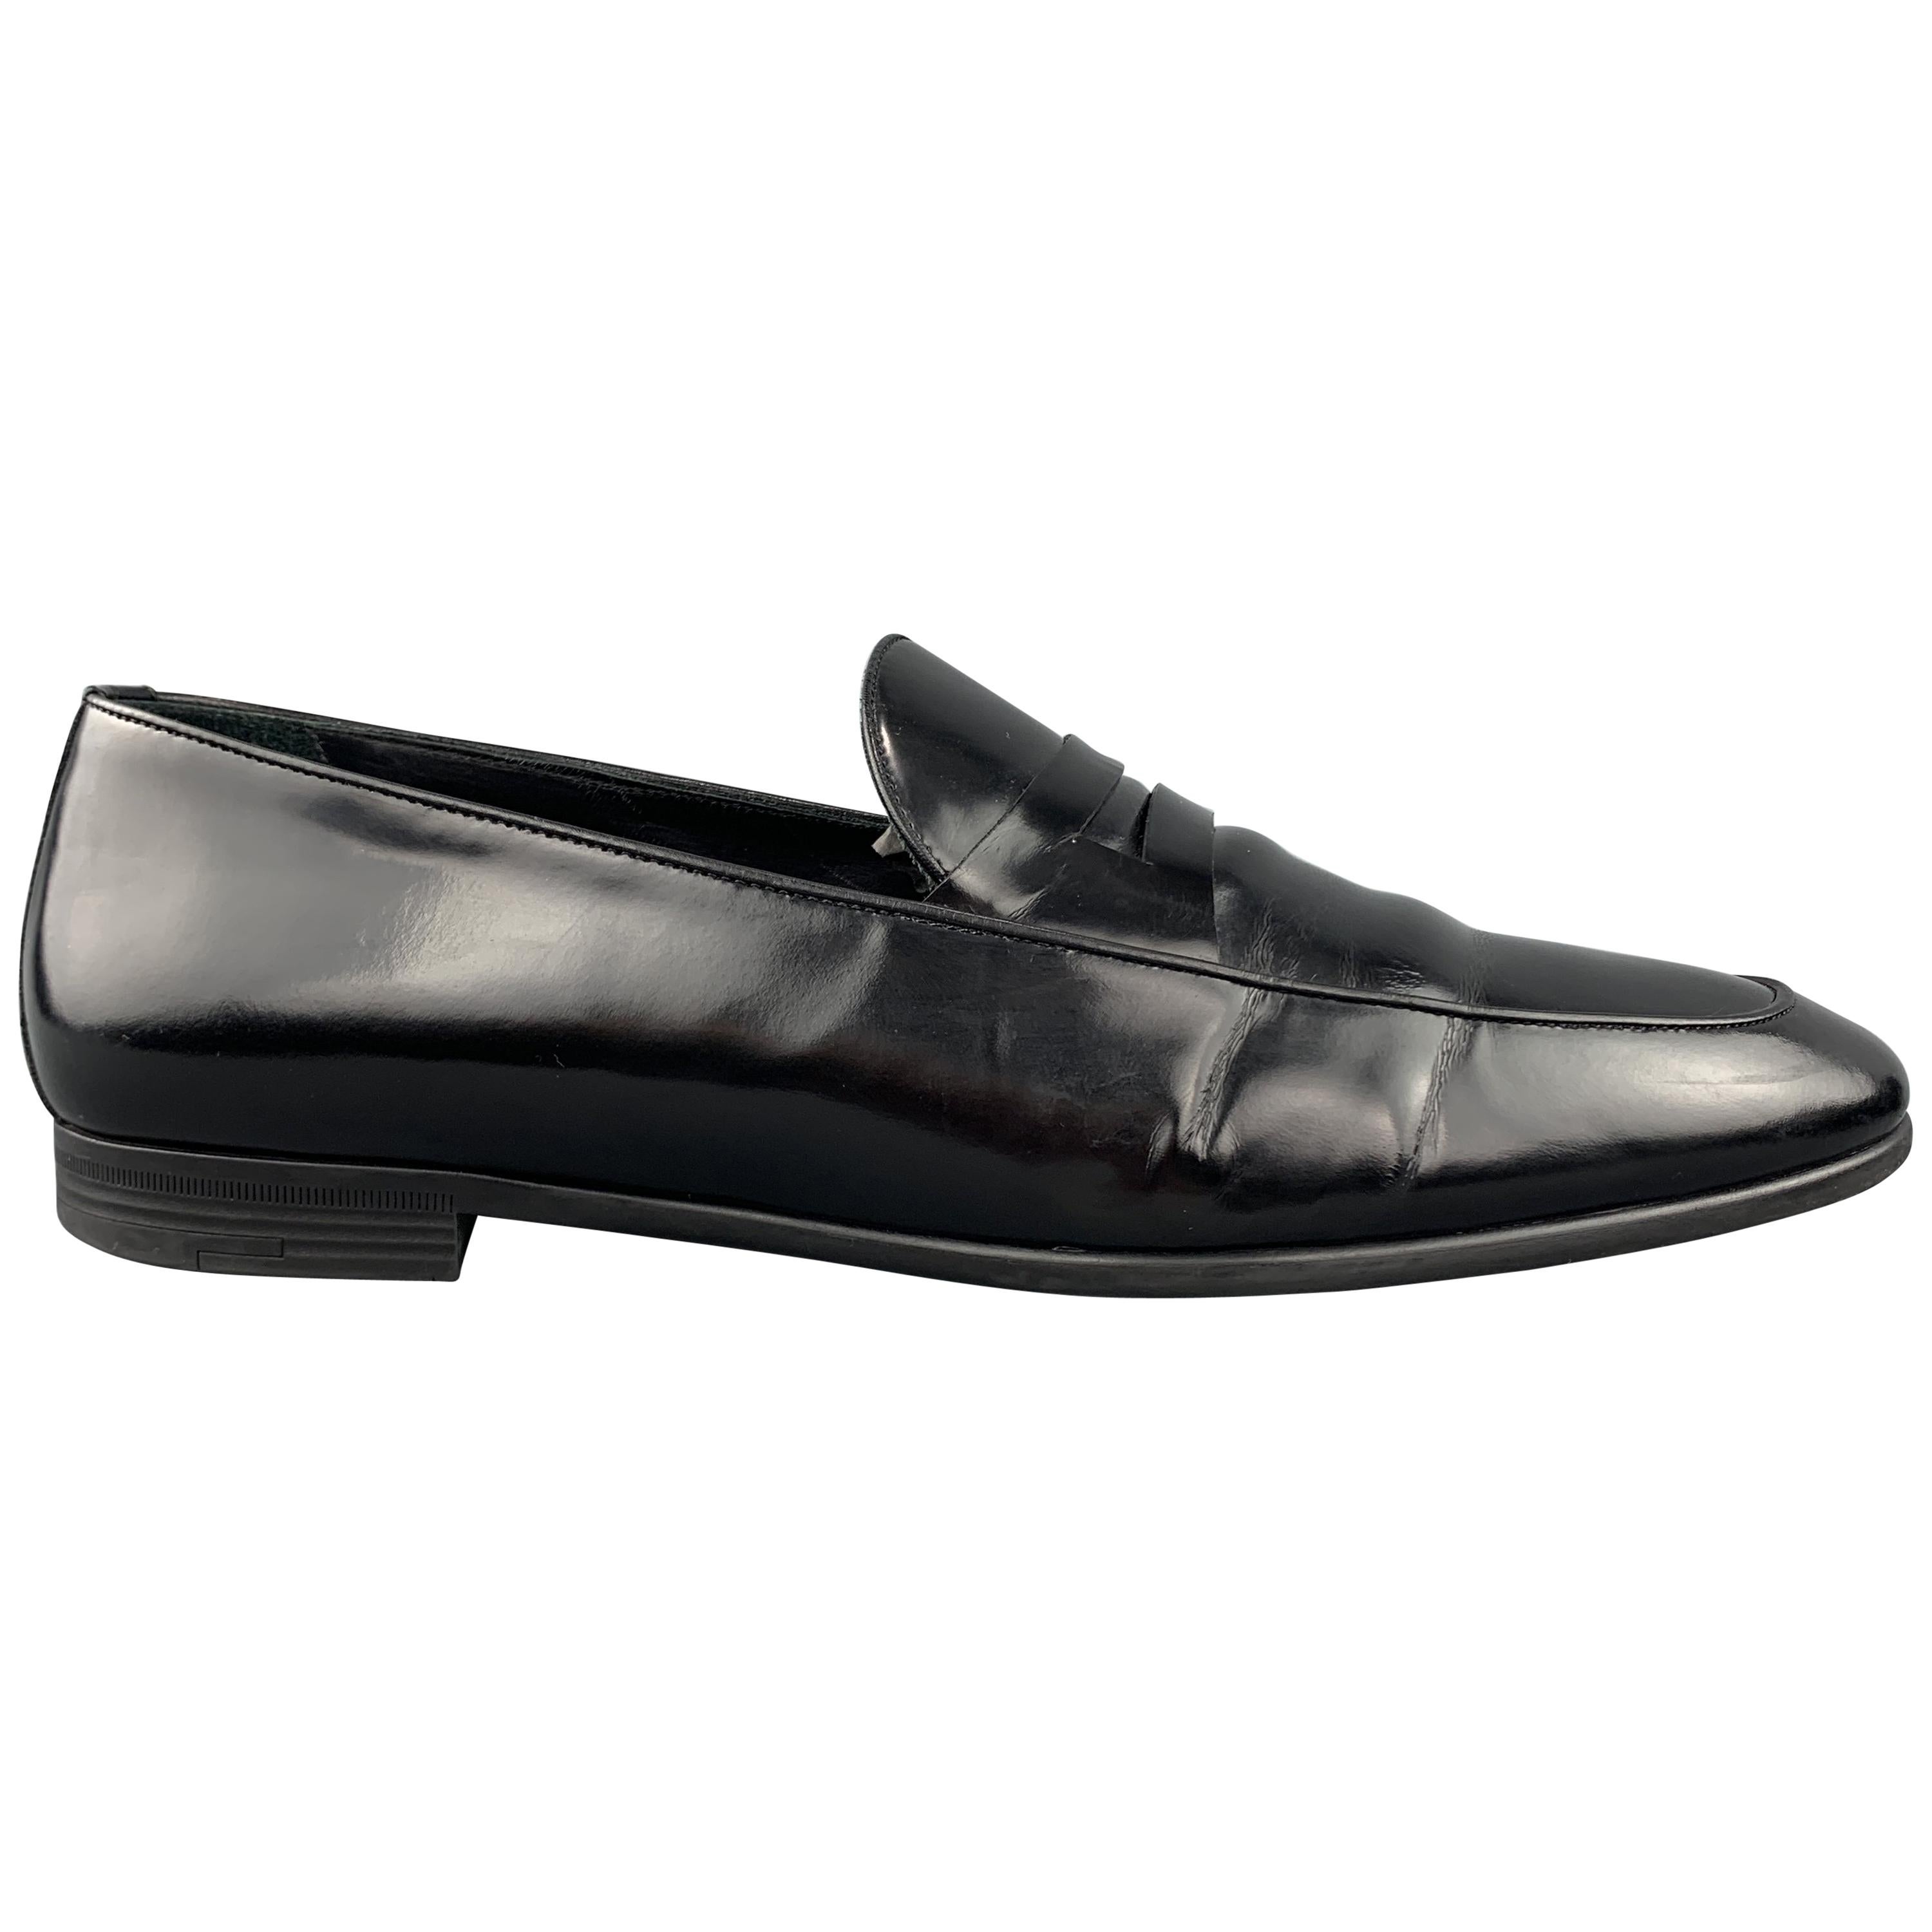 ERMENEGILDO ZEGNA Size 9.5 Black Patent Leather Slip On Loafers